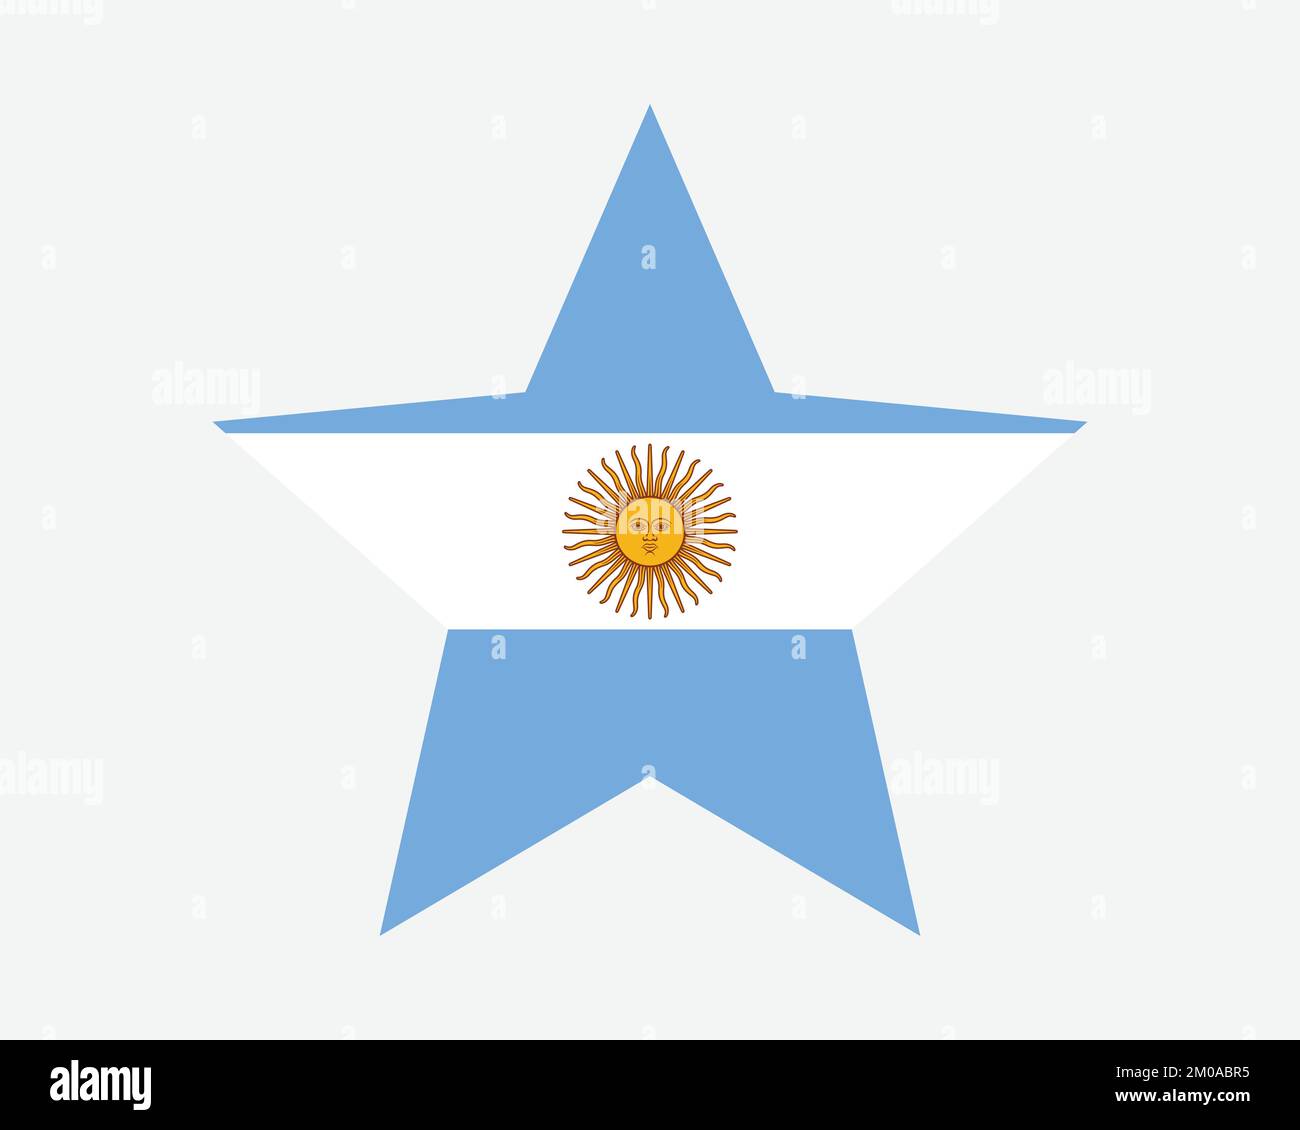 Sternenflagge Argentinien. Argentinische Sternform. Argentinisches argentinisches Land National Banner Symbol Symbol Vektor 2D flache Kunstwerke Grafik Illustratio Stock Vektor